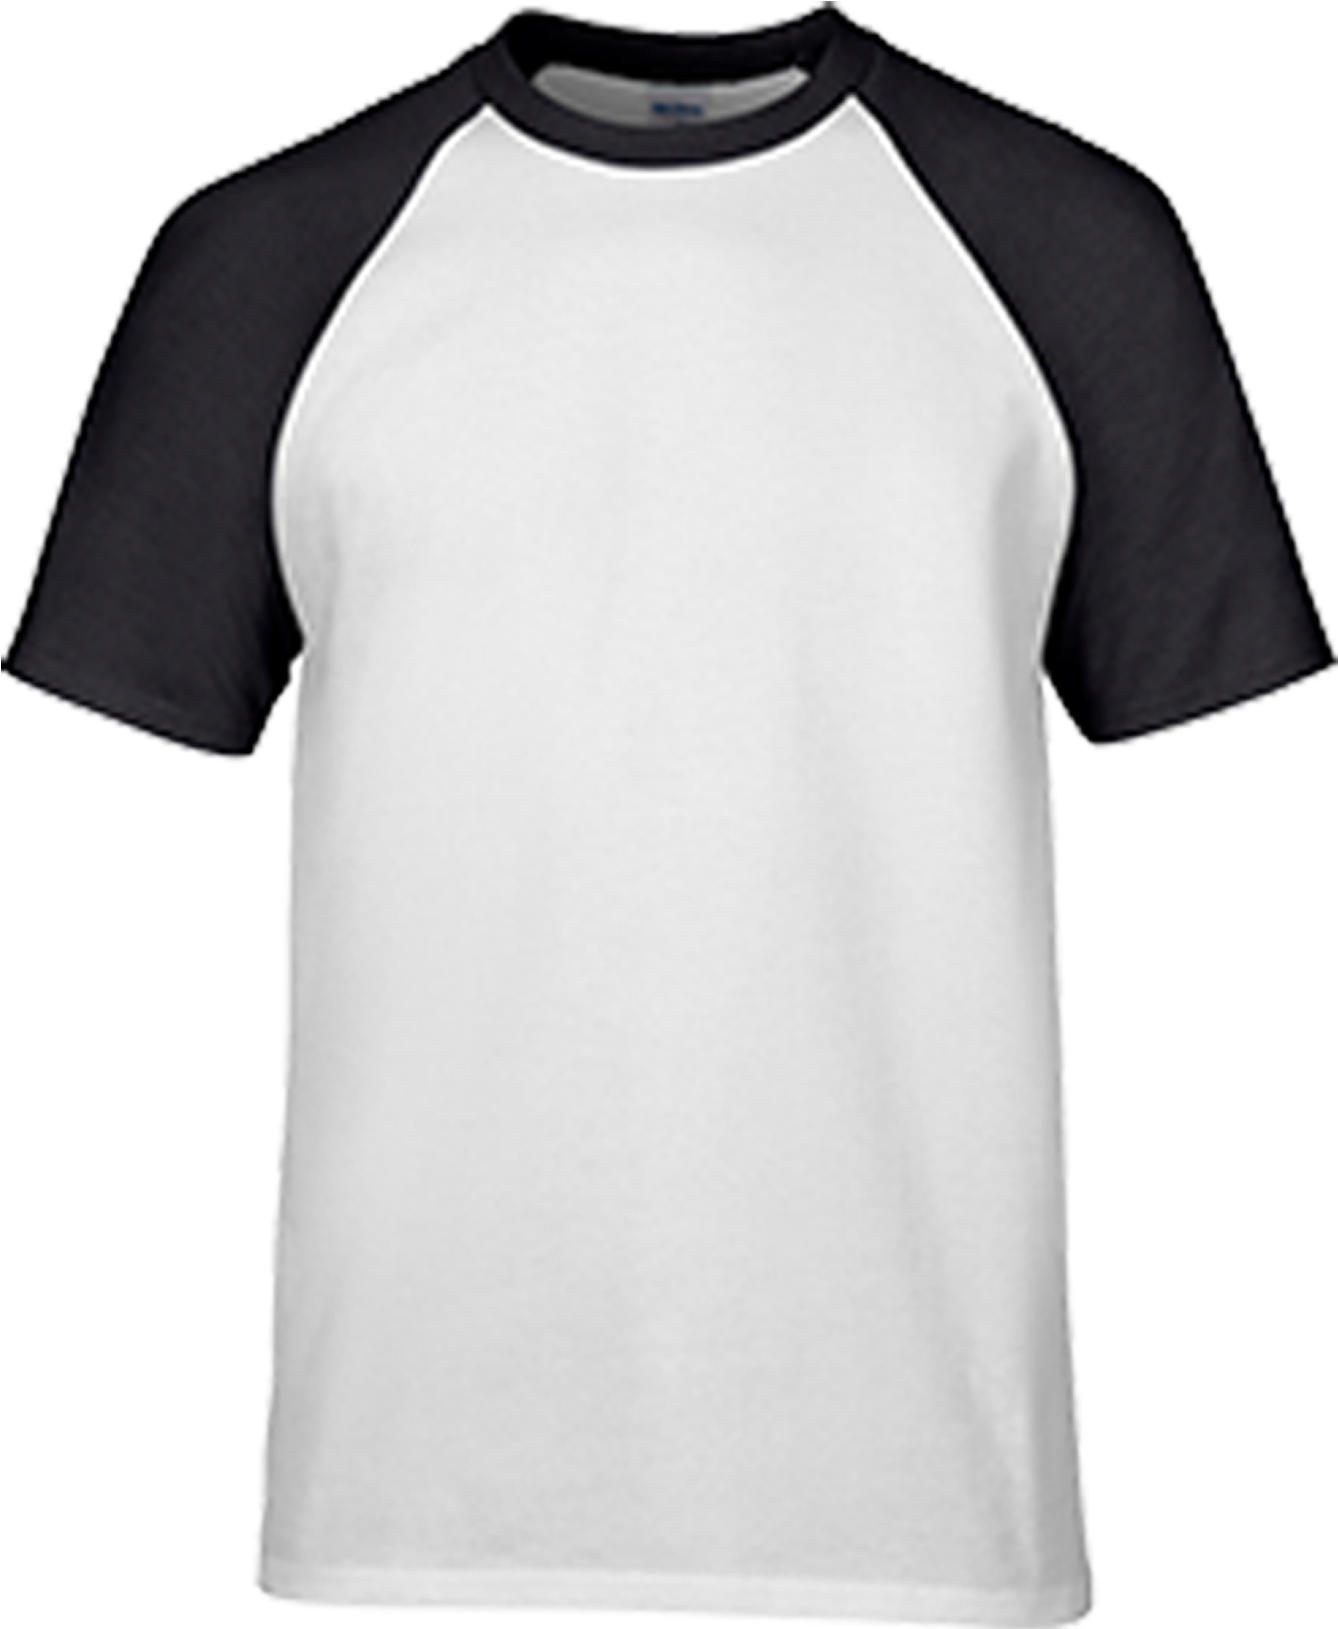 Blackand White Raglan T Shirt PNG